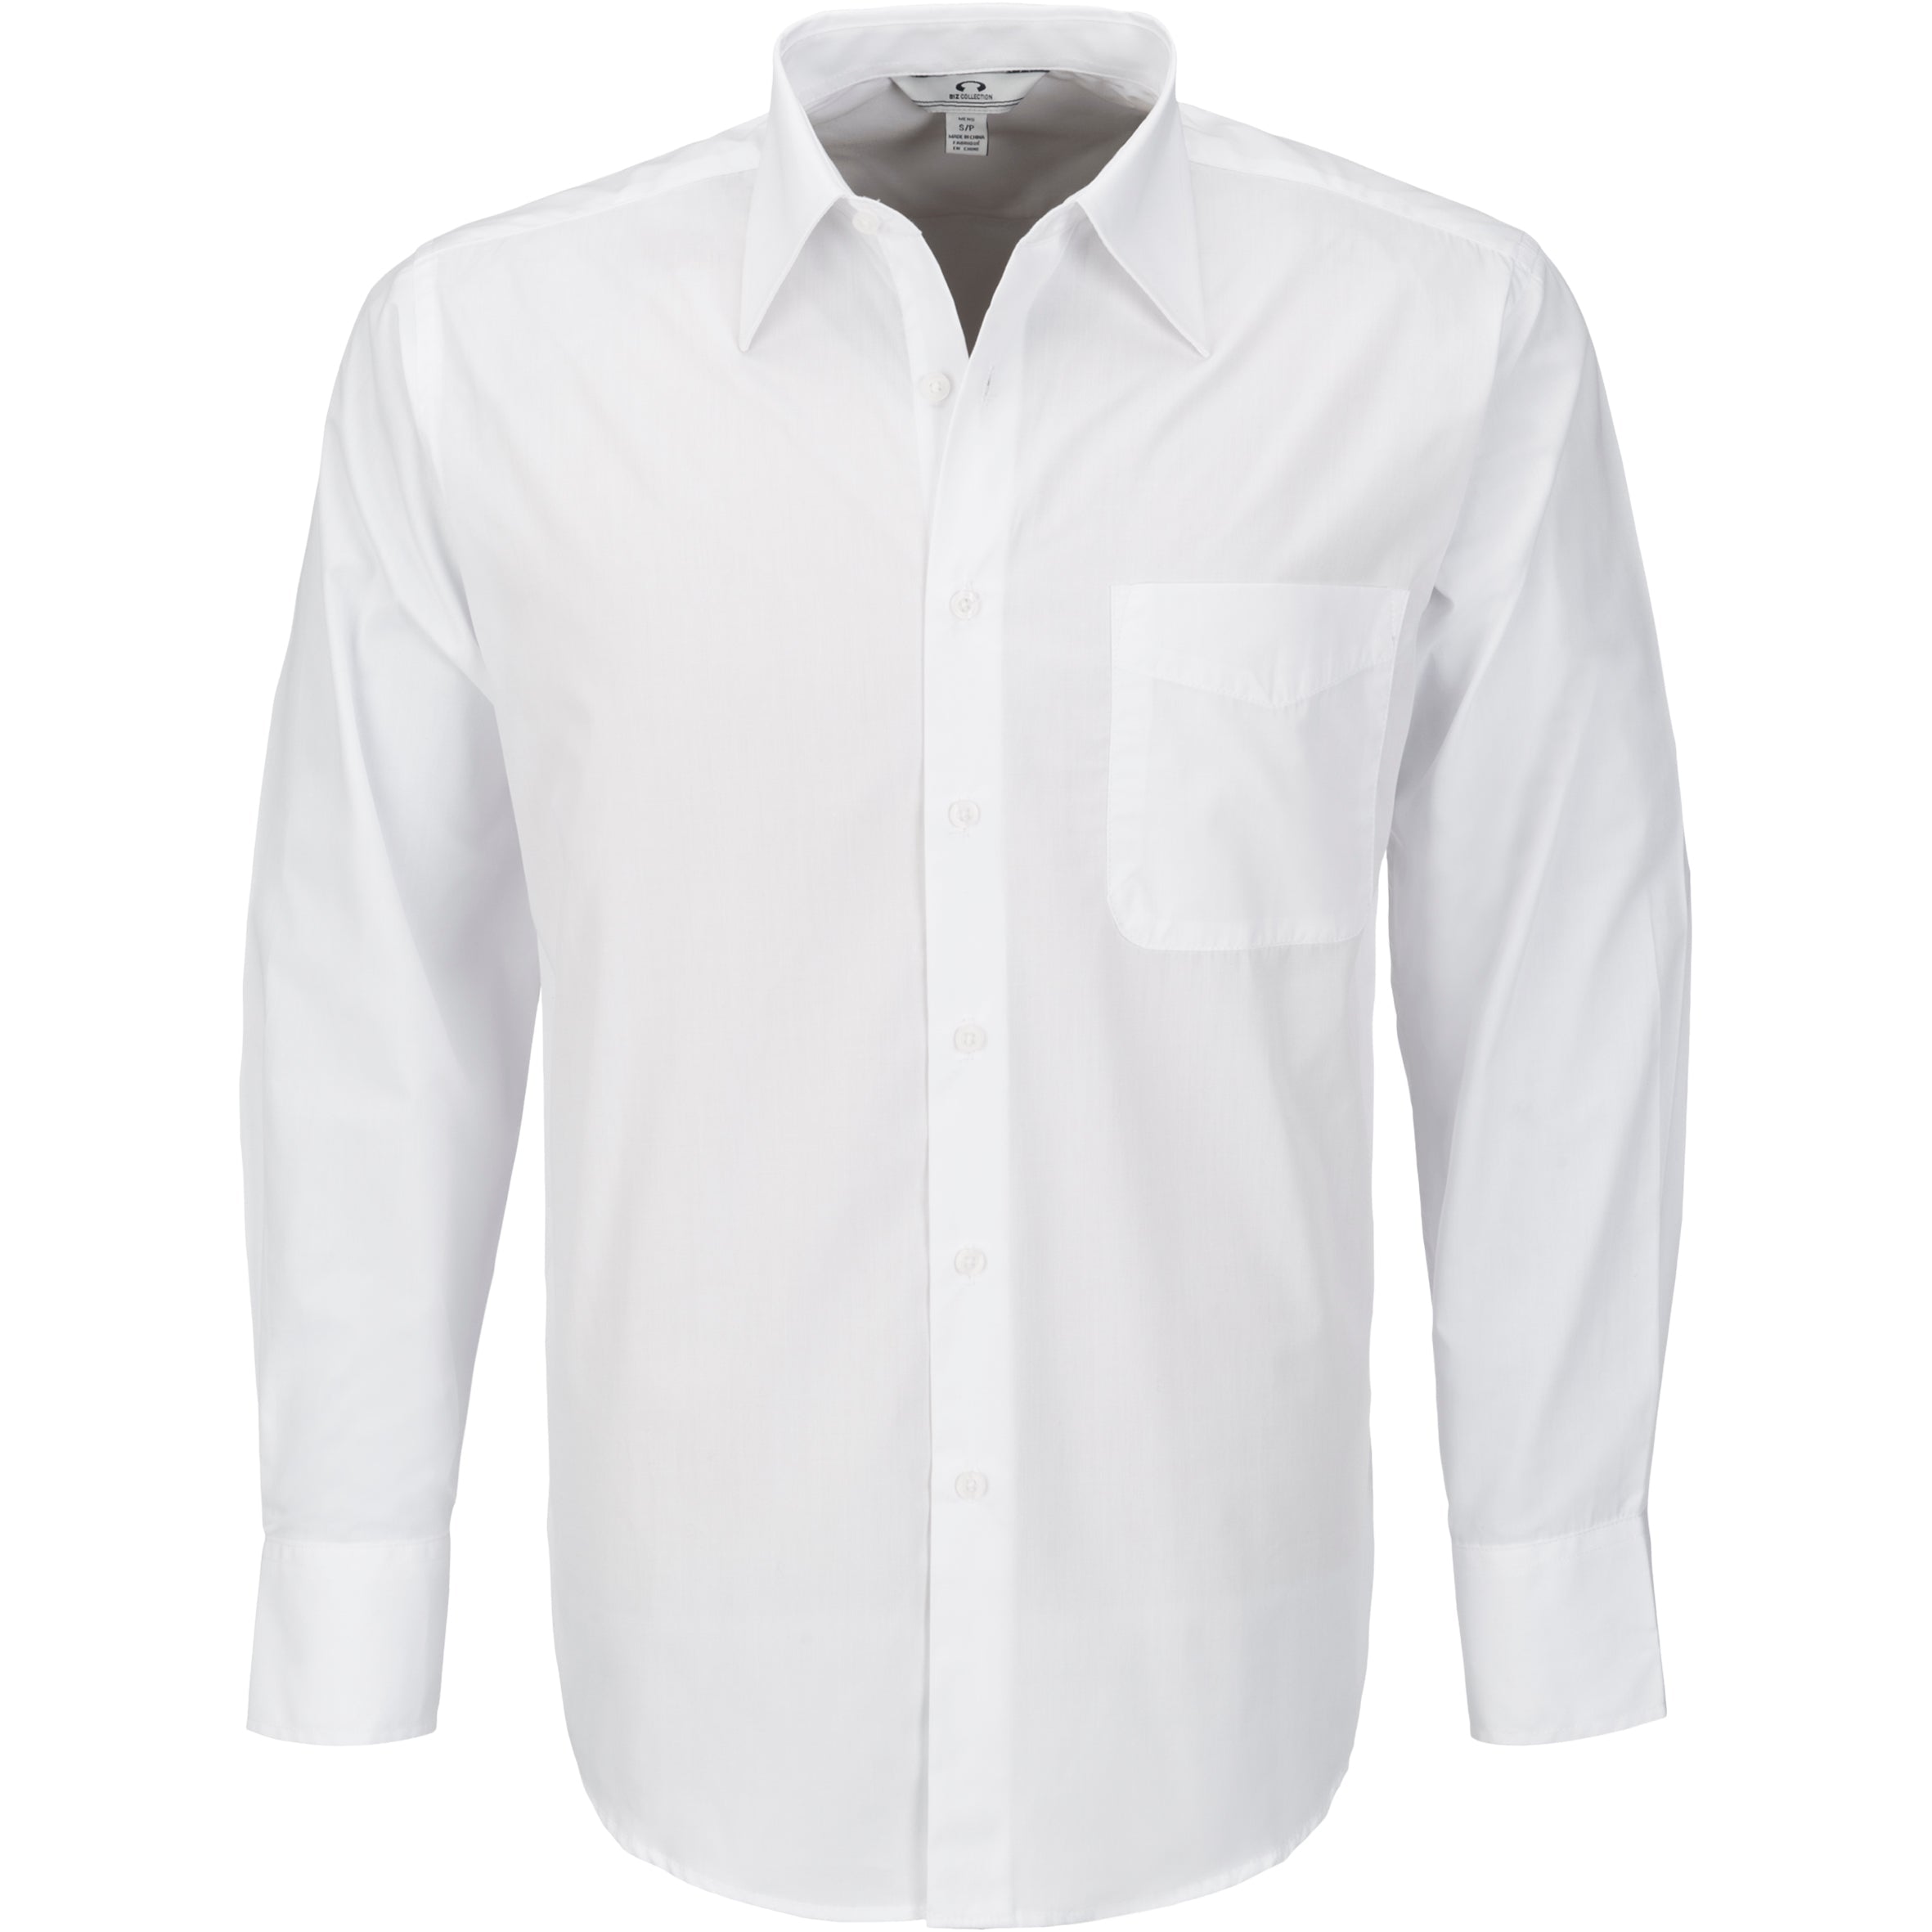 Mens Long Sleeve Metro Shirt - Grey Only-L-White-W